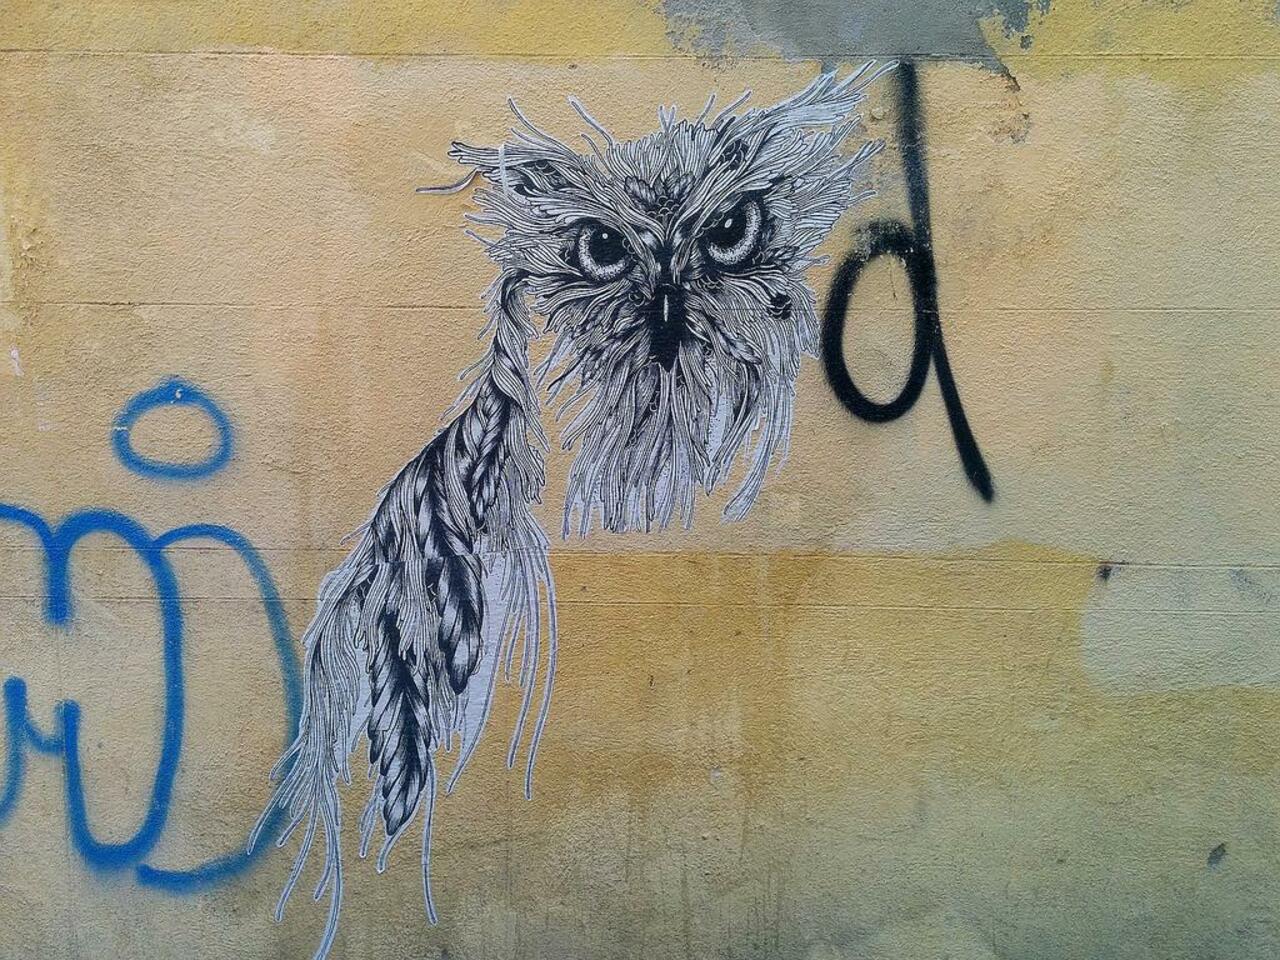 Street Art by anonymous in #Marseille http://www.urbacolors.com #art #mural #graffiti #streetart http://t.co/R8ZZanApVI